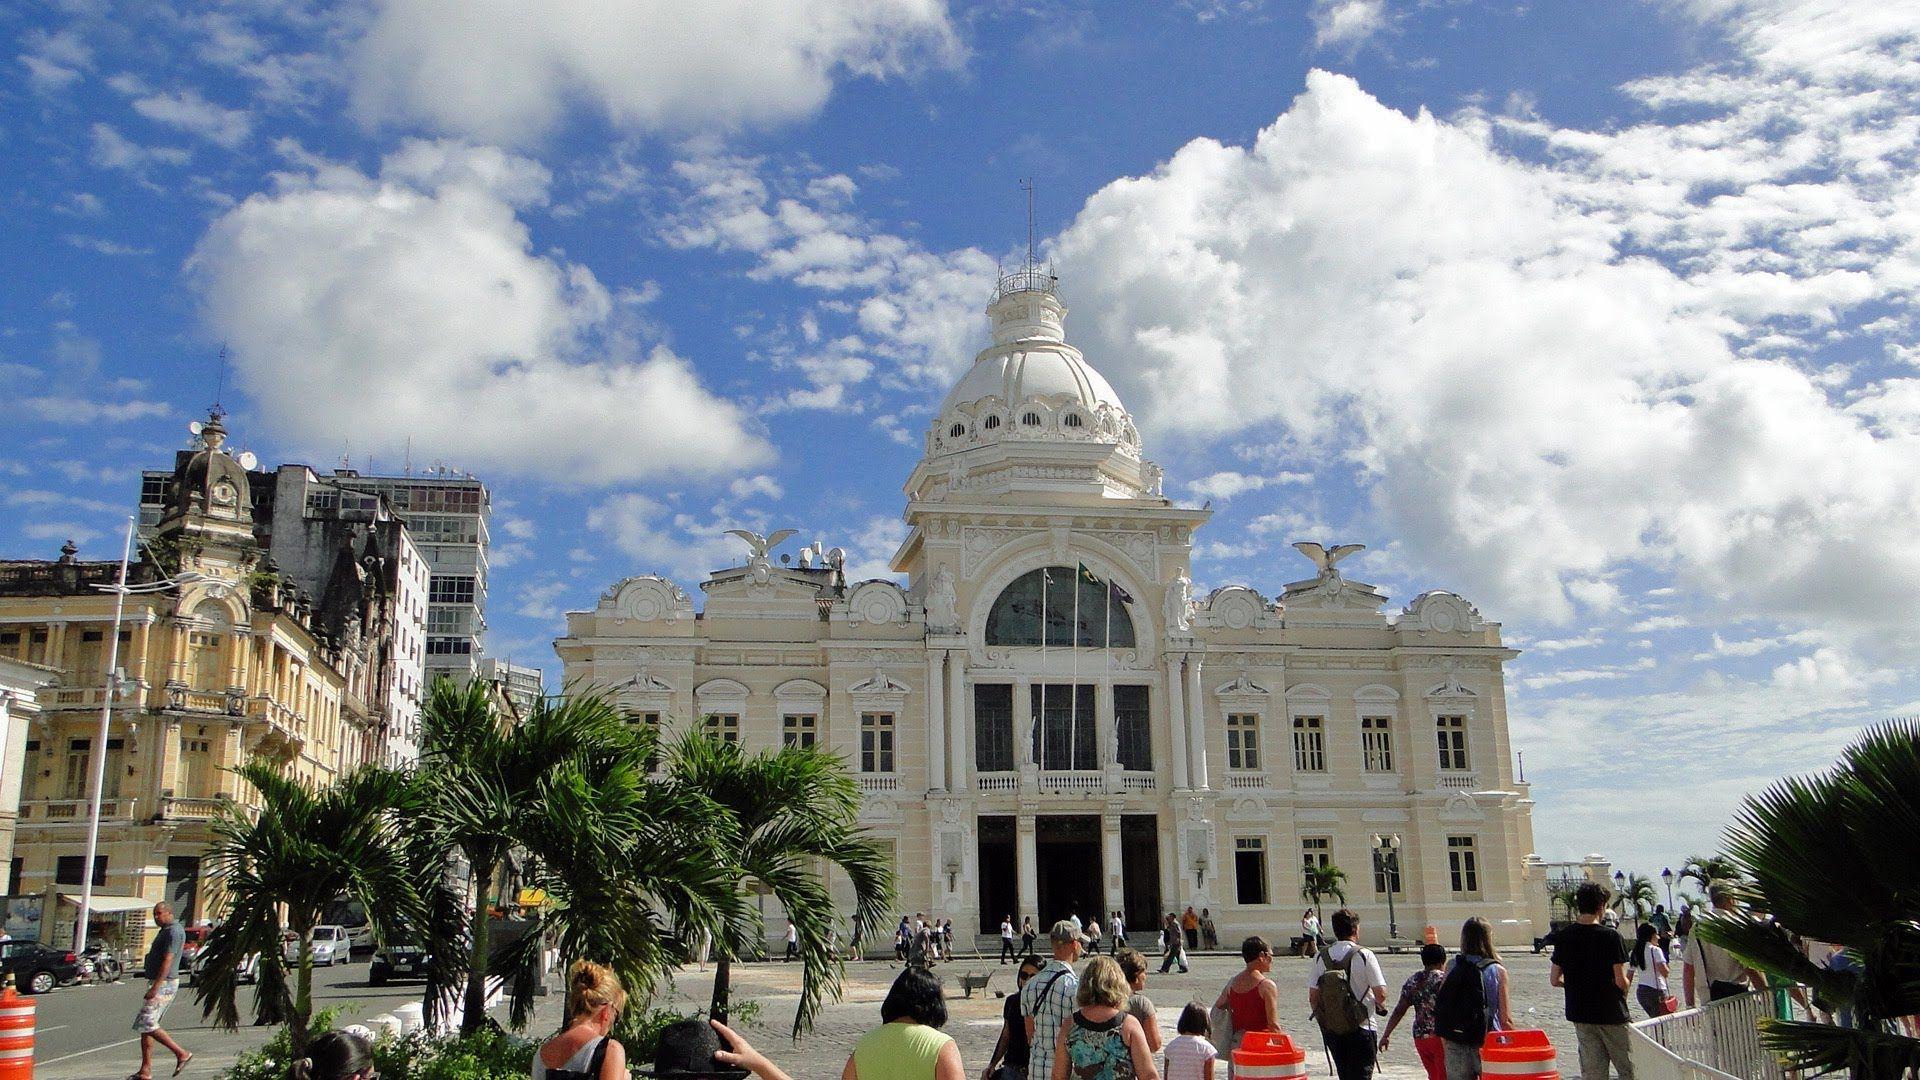 Salvador da Bahia / Brazil lovely city tour in HD